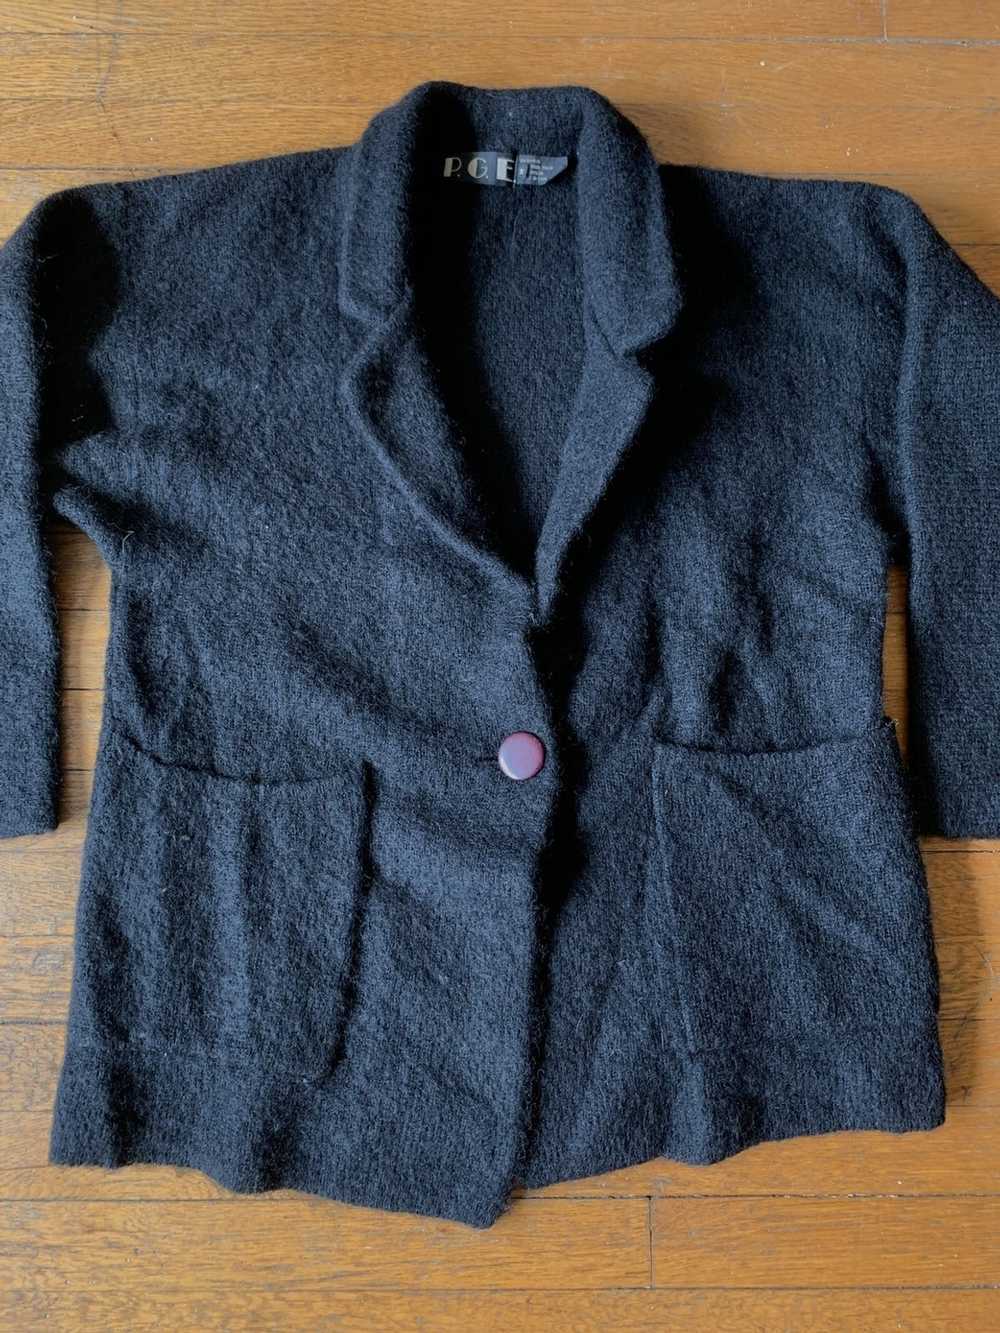 Vintage 80s Black Mohair Cardigan Sweater - image 1